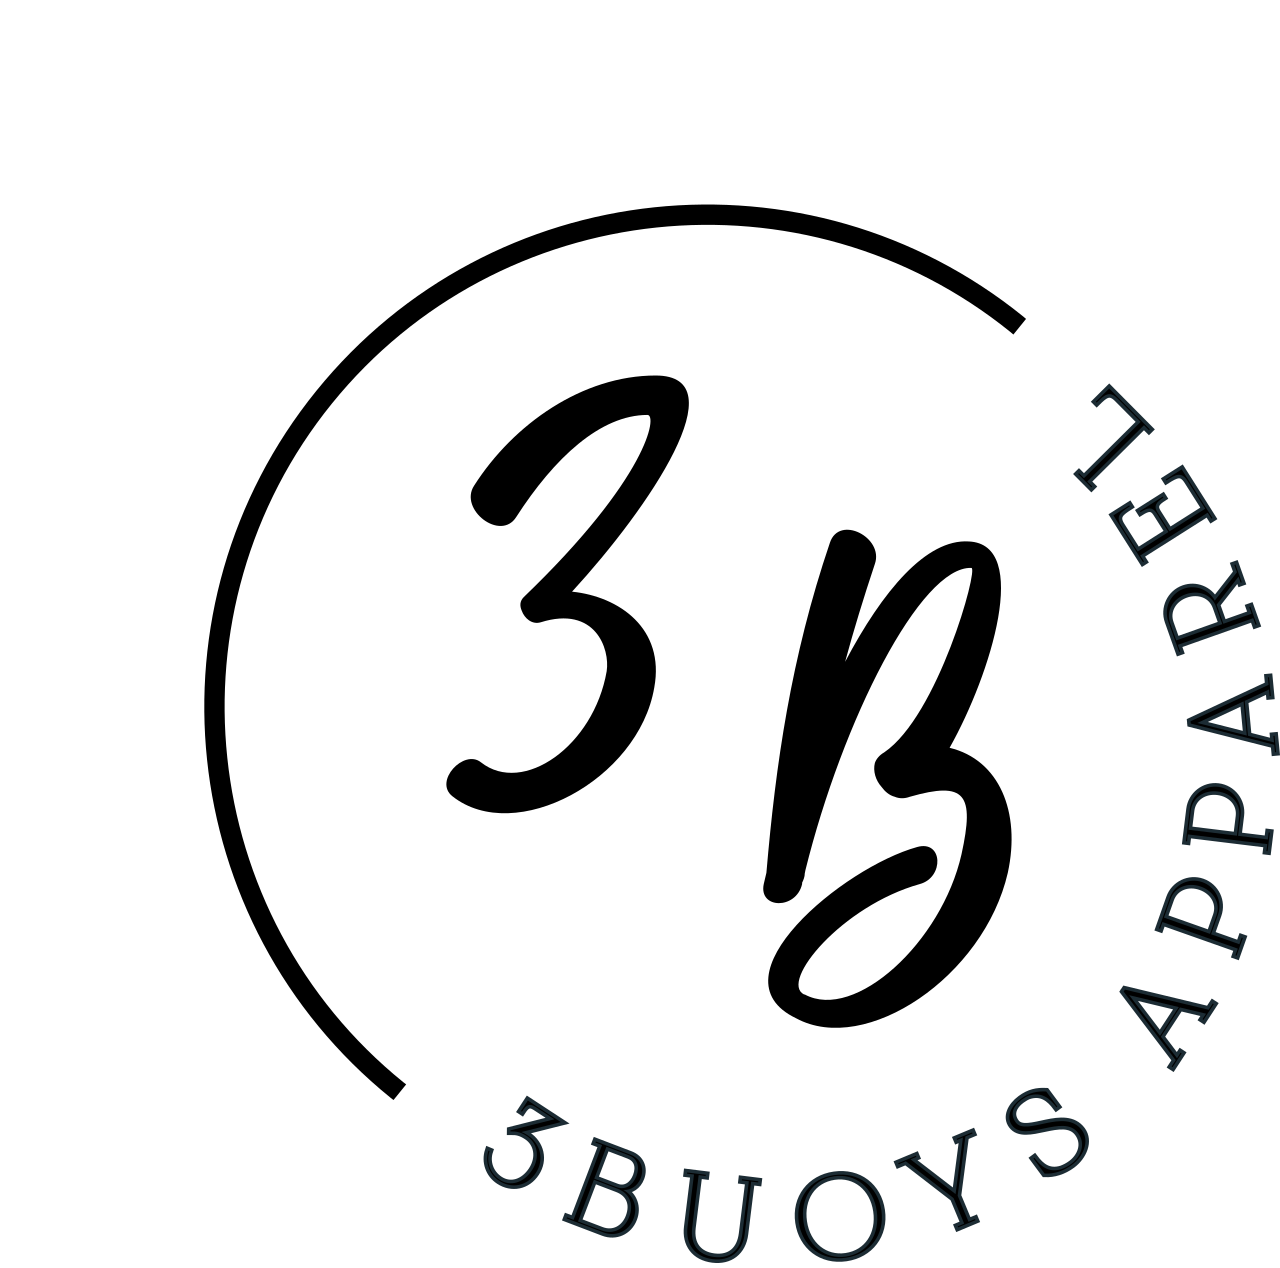 3BUOYS APPAREL's logo